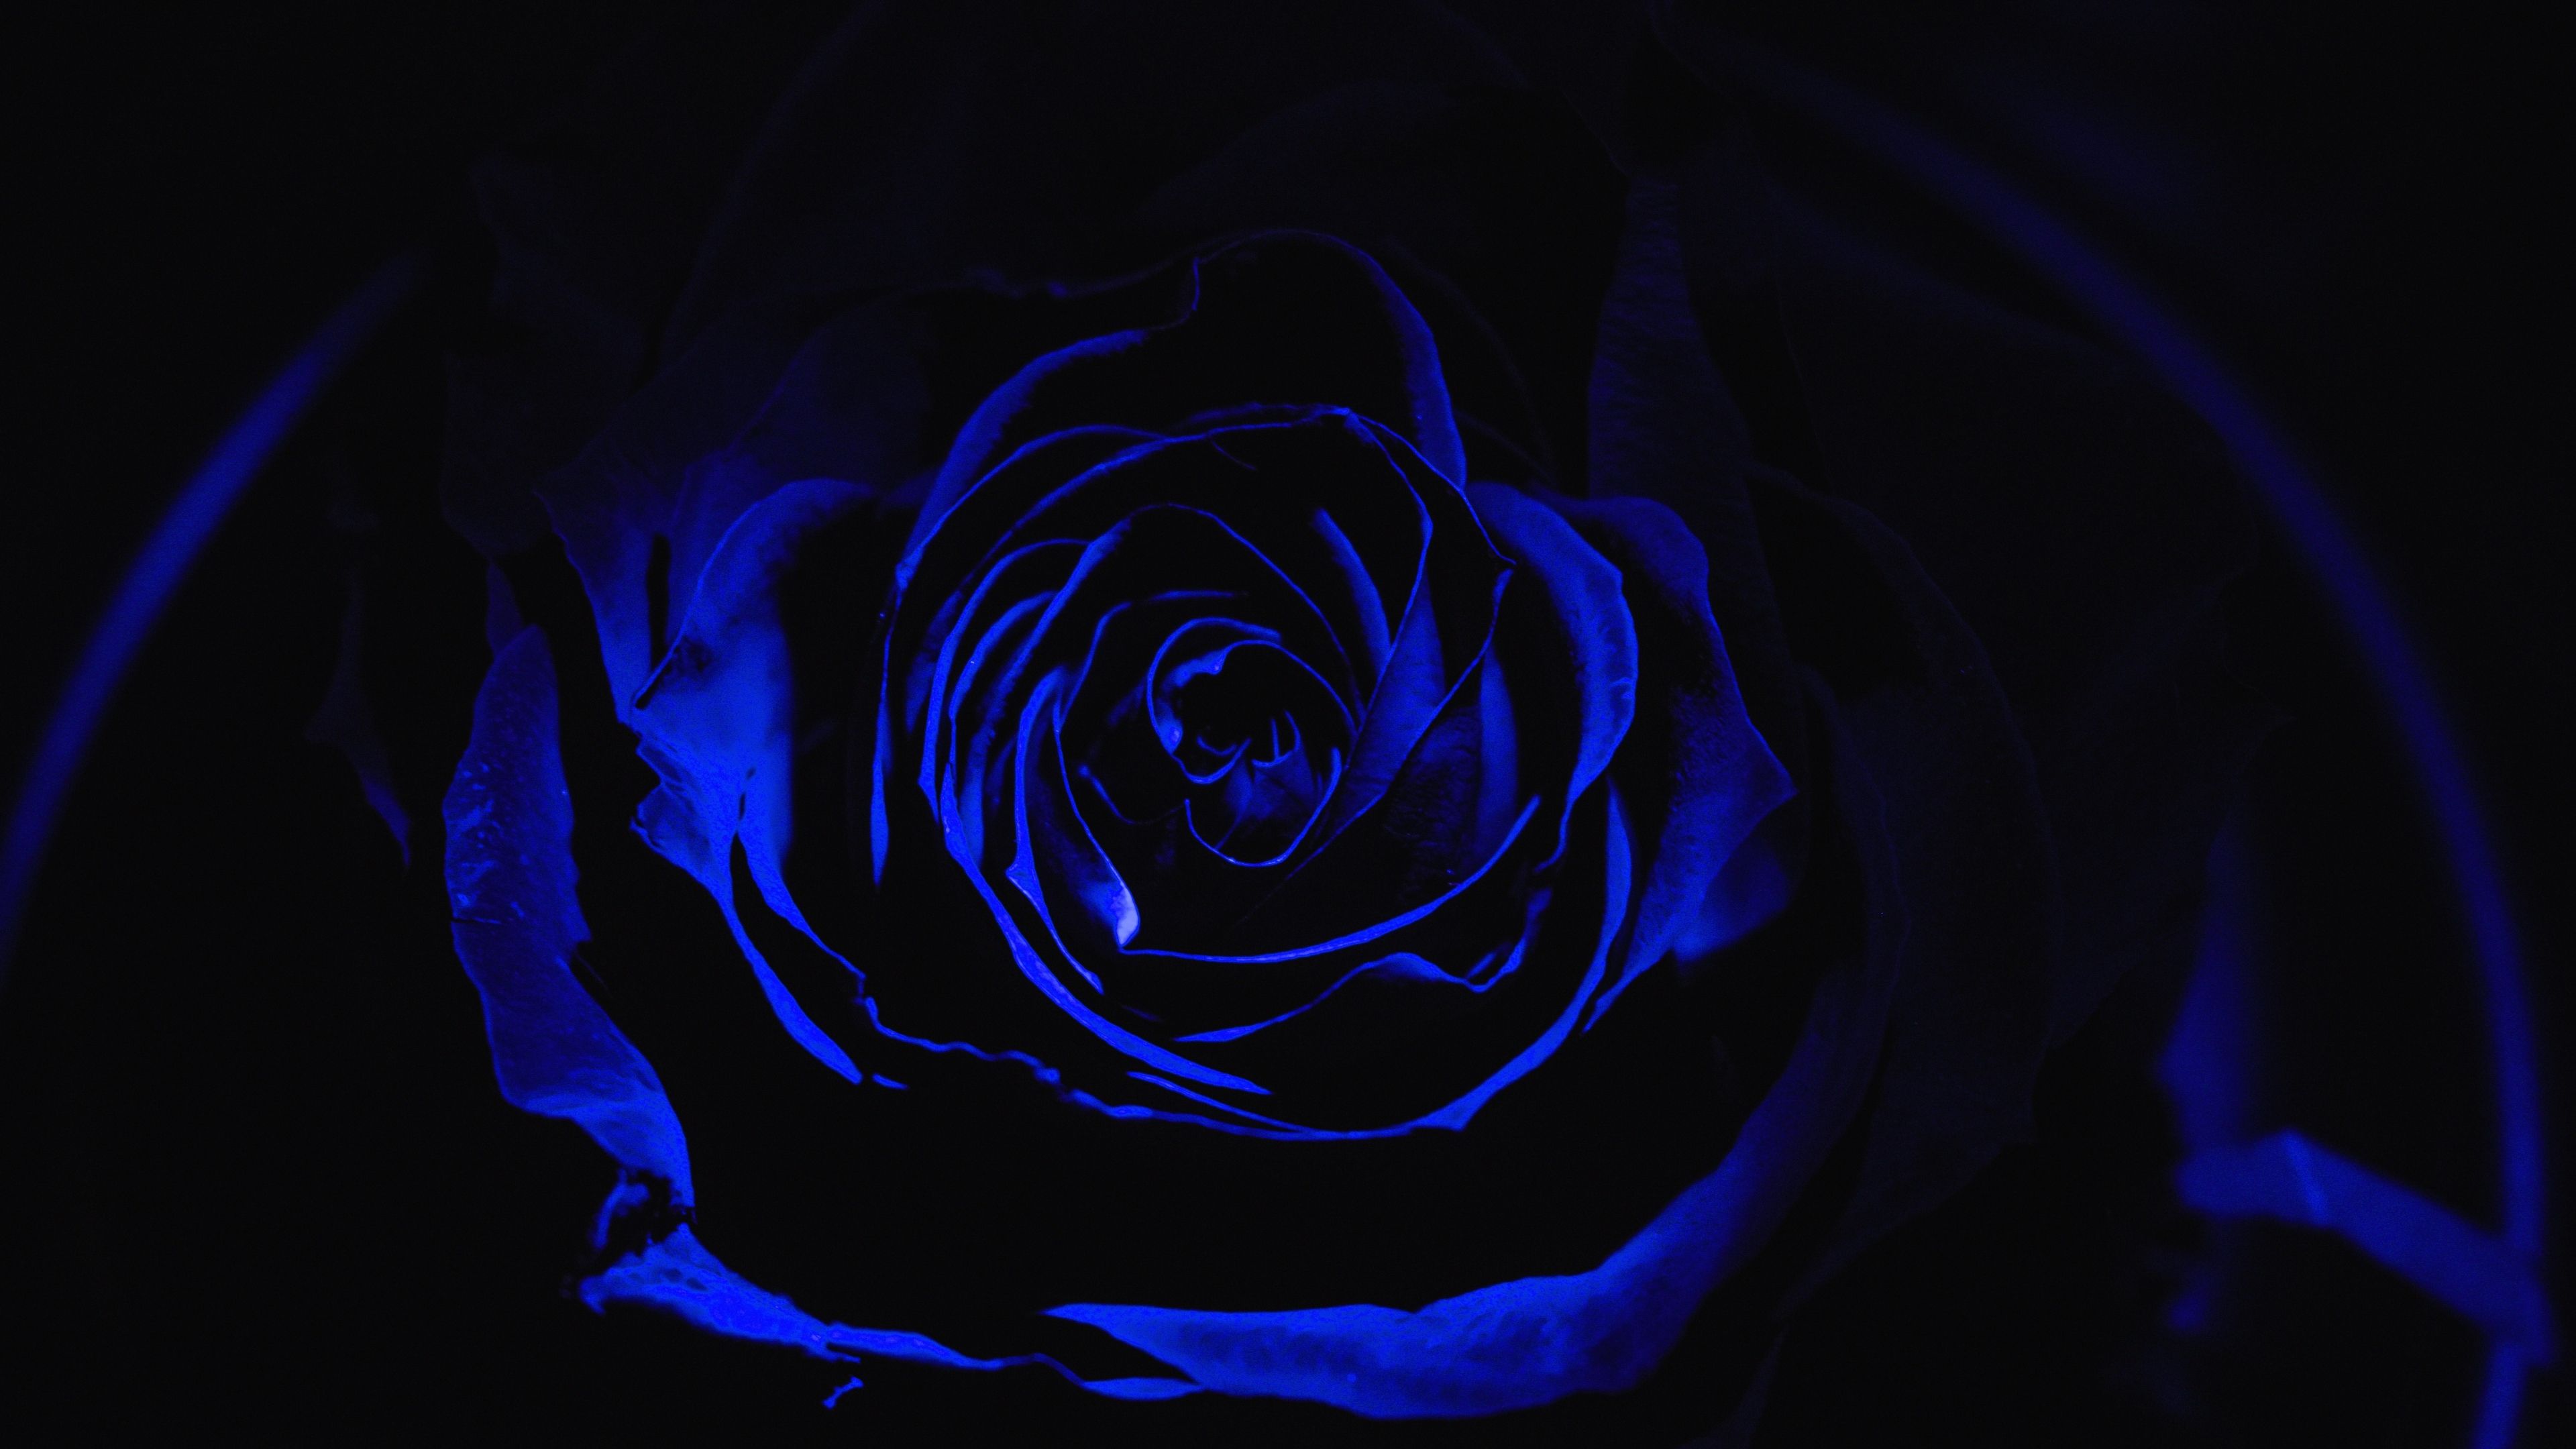 1000 Blue Rose Pictures  Download Free Images on Unsplash